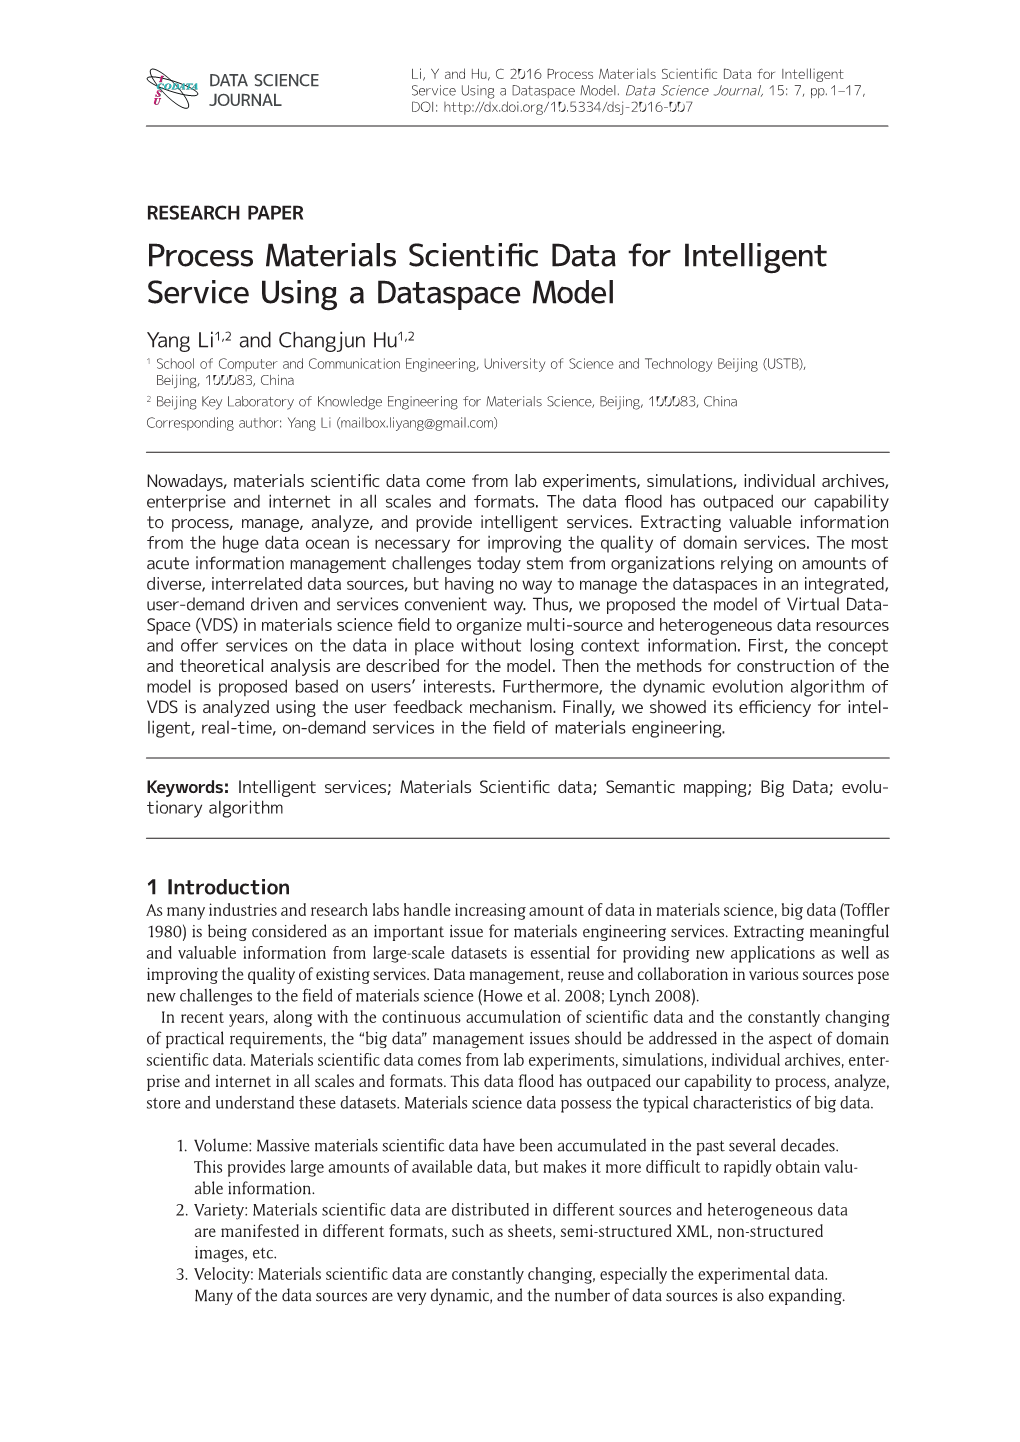 Process Materials Scientific Data for Intelligent Service Using A